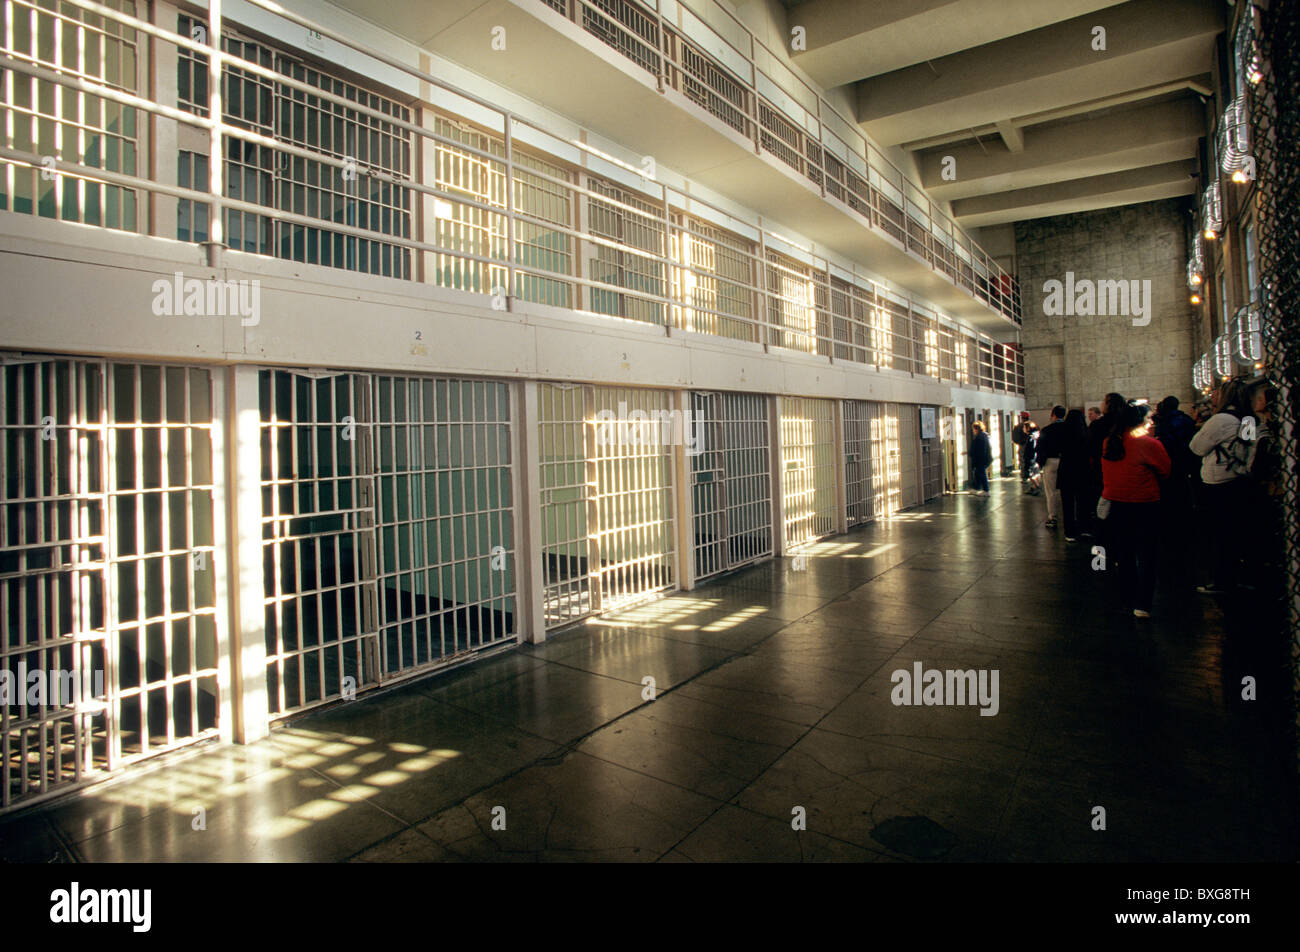 Cells in blockhouse, Alcatraz Island. Stock Photo